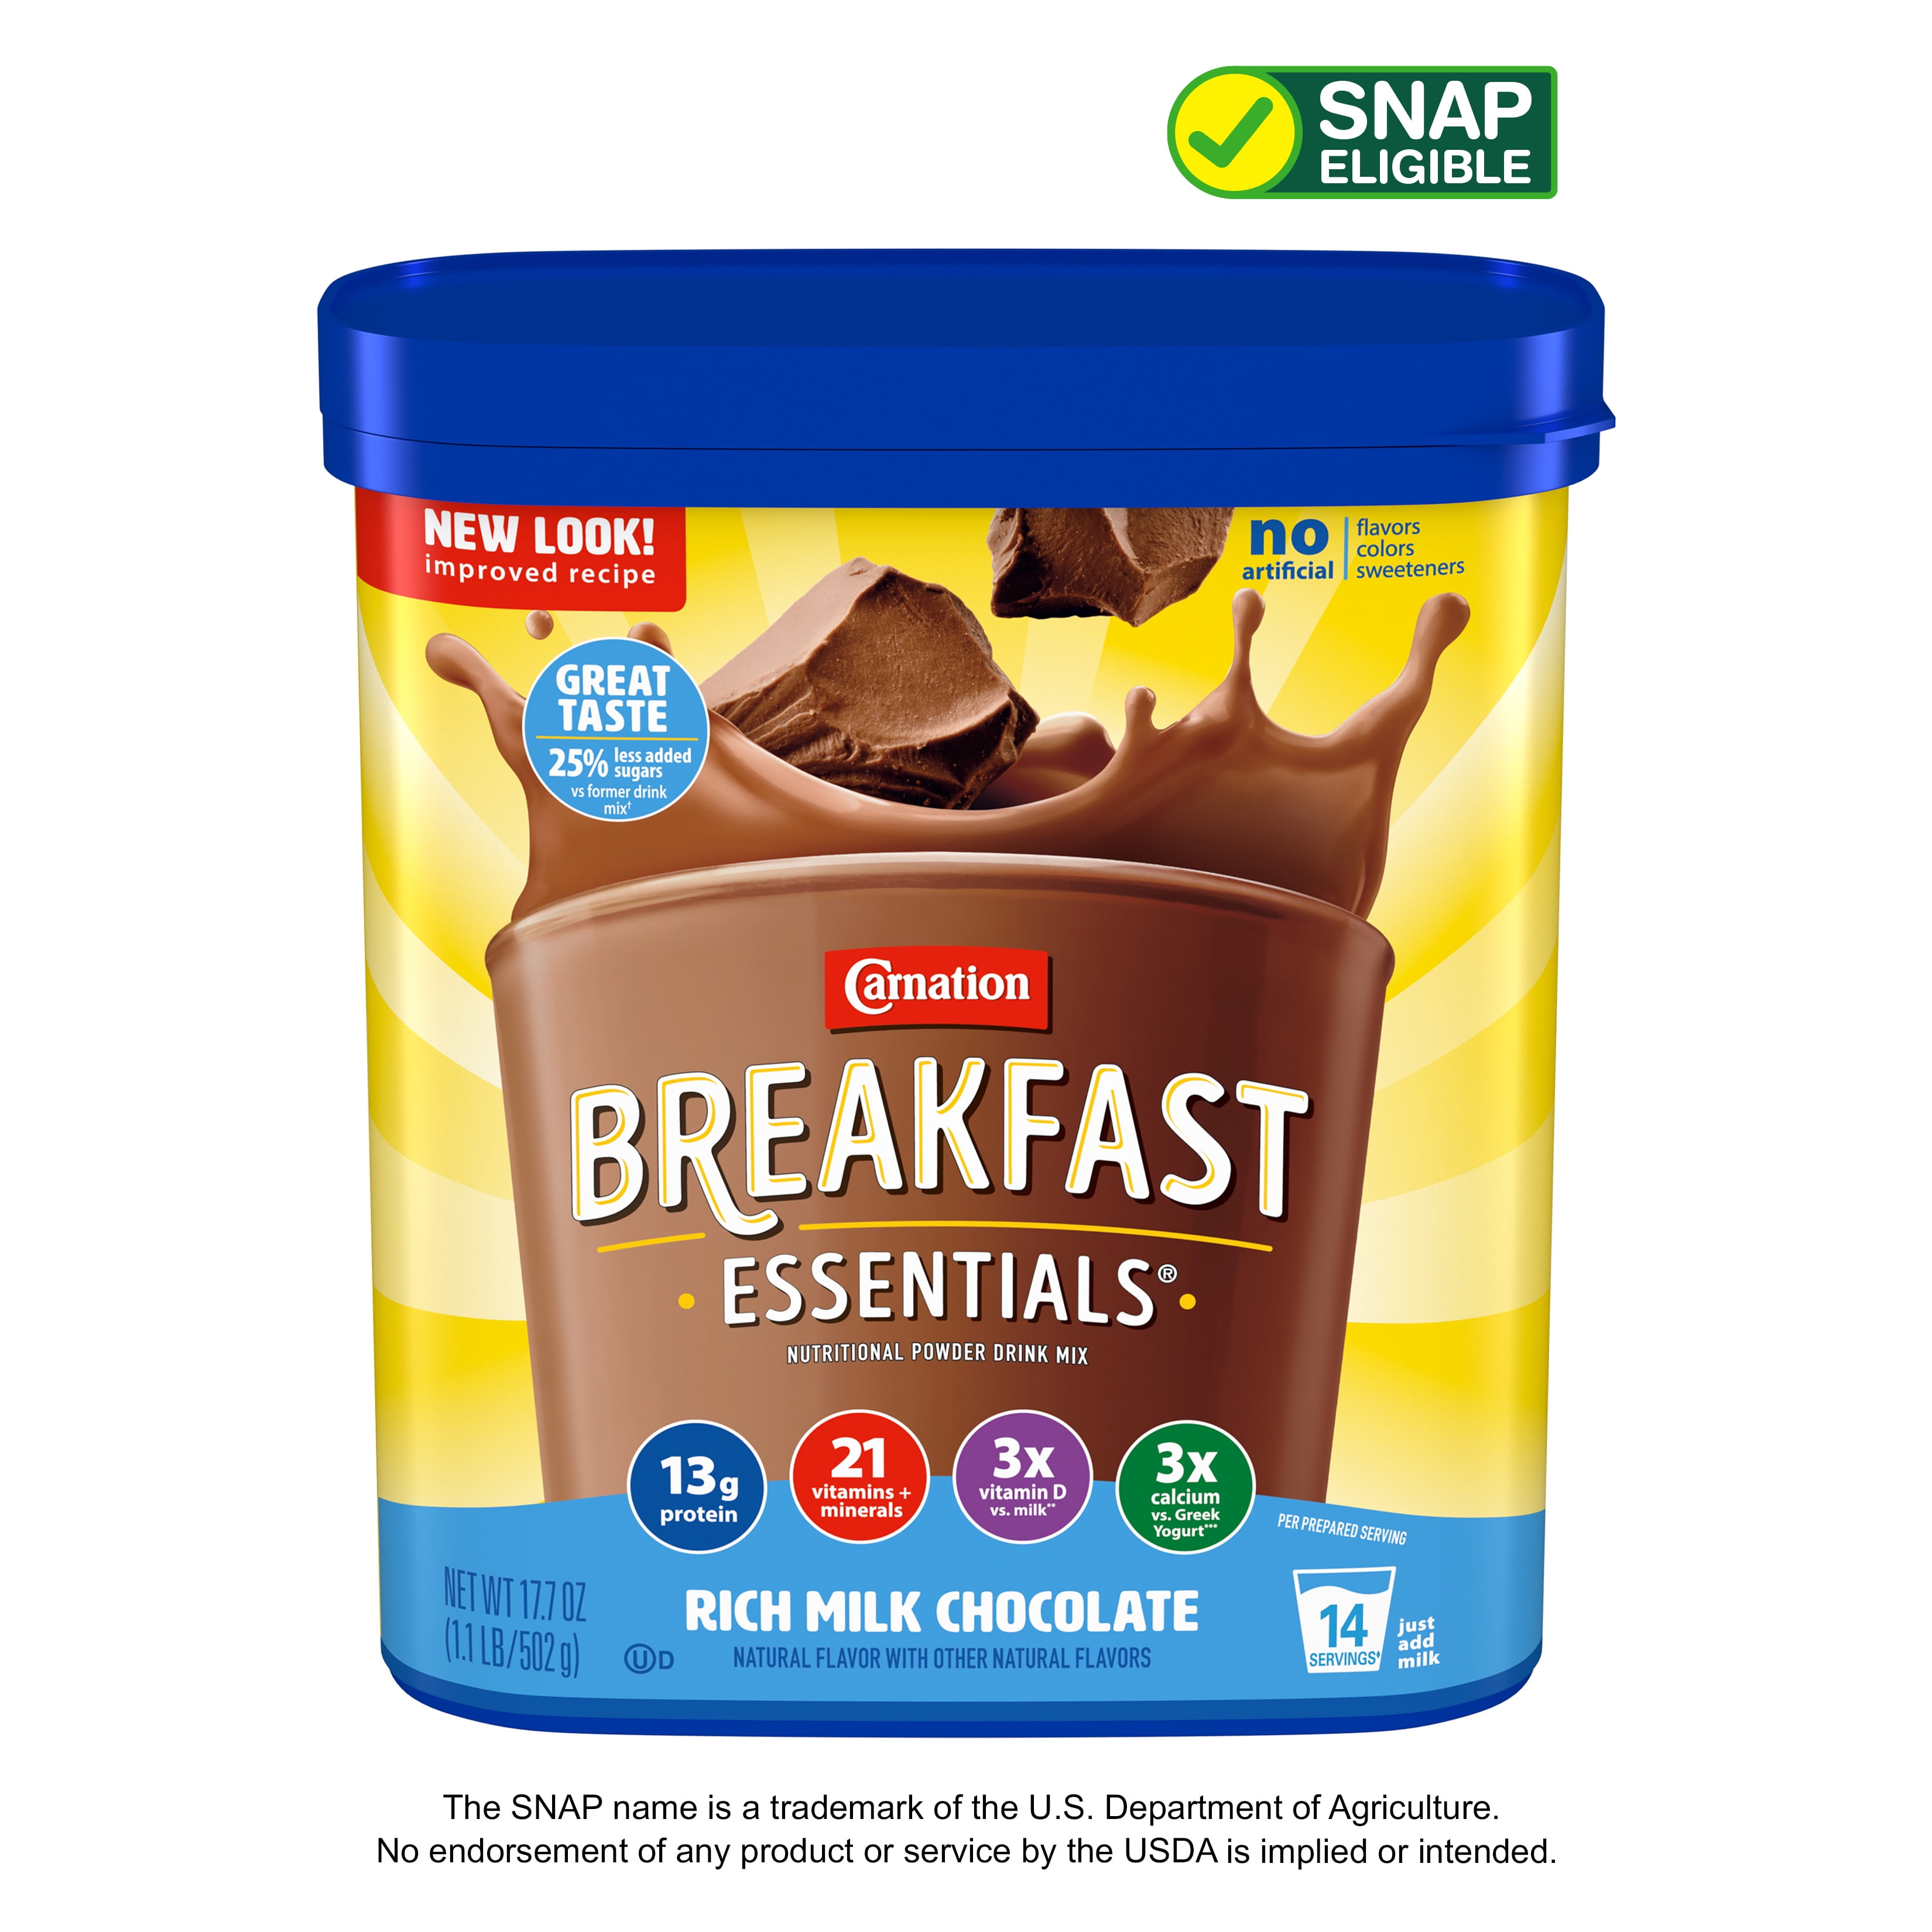 Carnation Breakfast Essentials® Original Nutritional Drink Mix